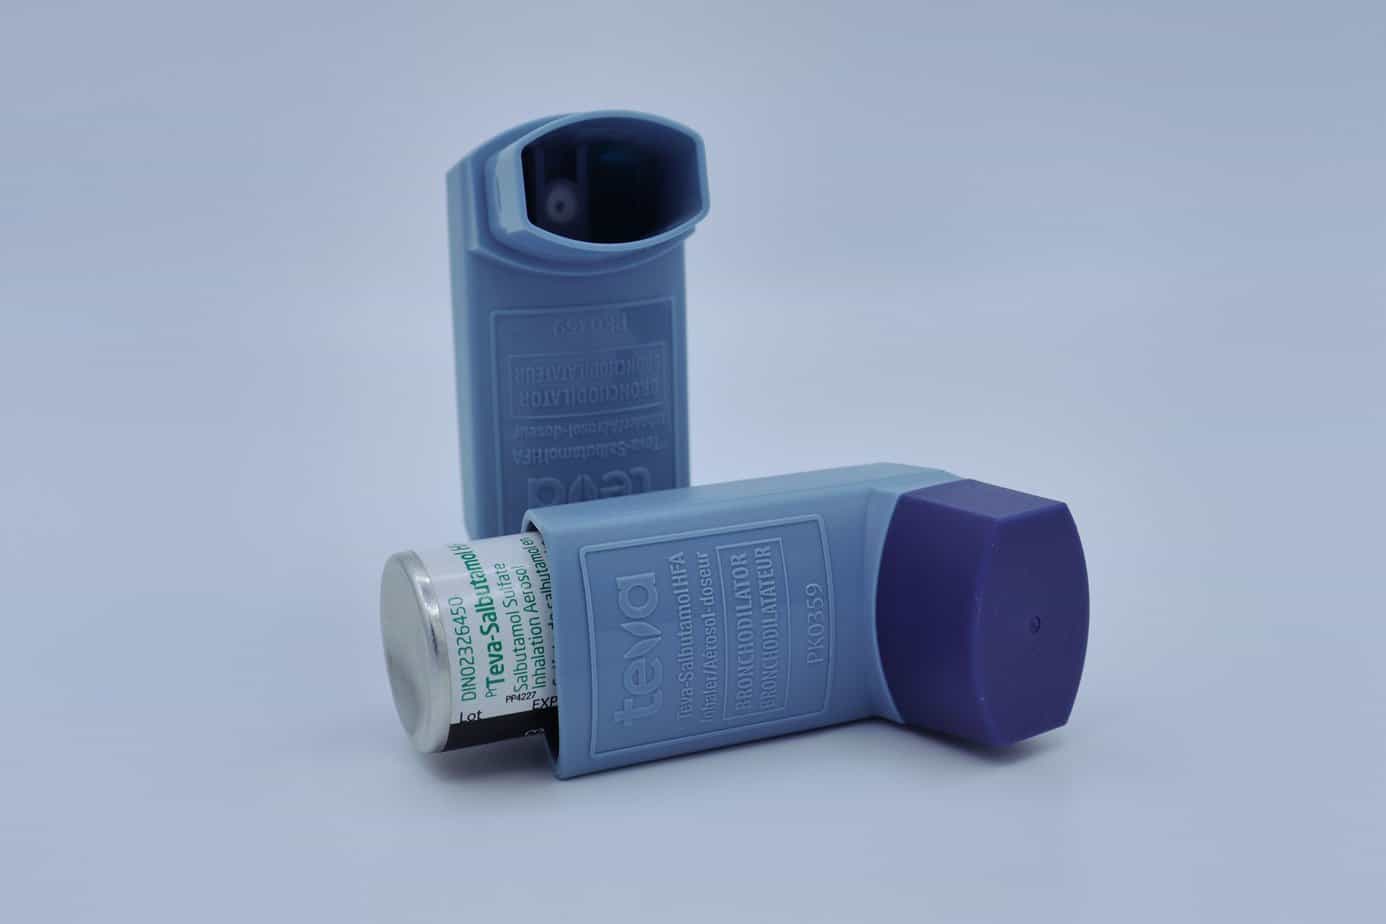 Inhaler for asthma patients